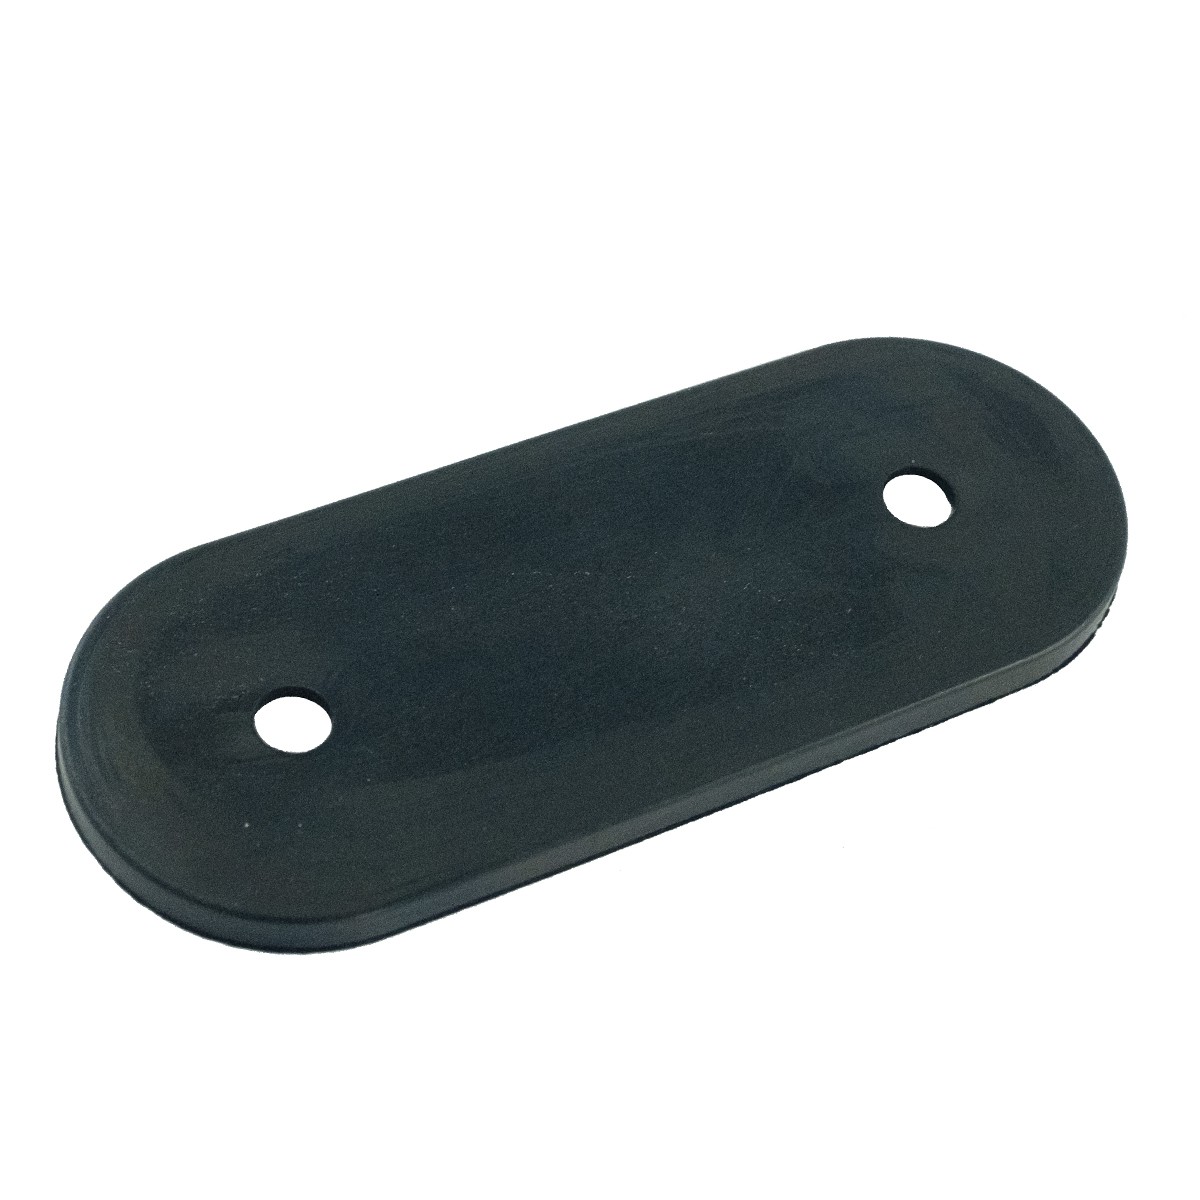 Rubber pad for door hinge / TRG862 / A1862148 / Ls Tractor 40007523